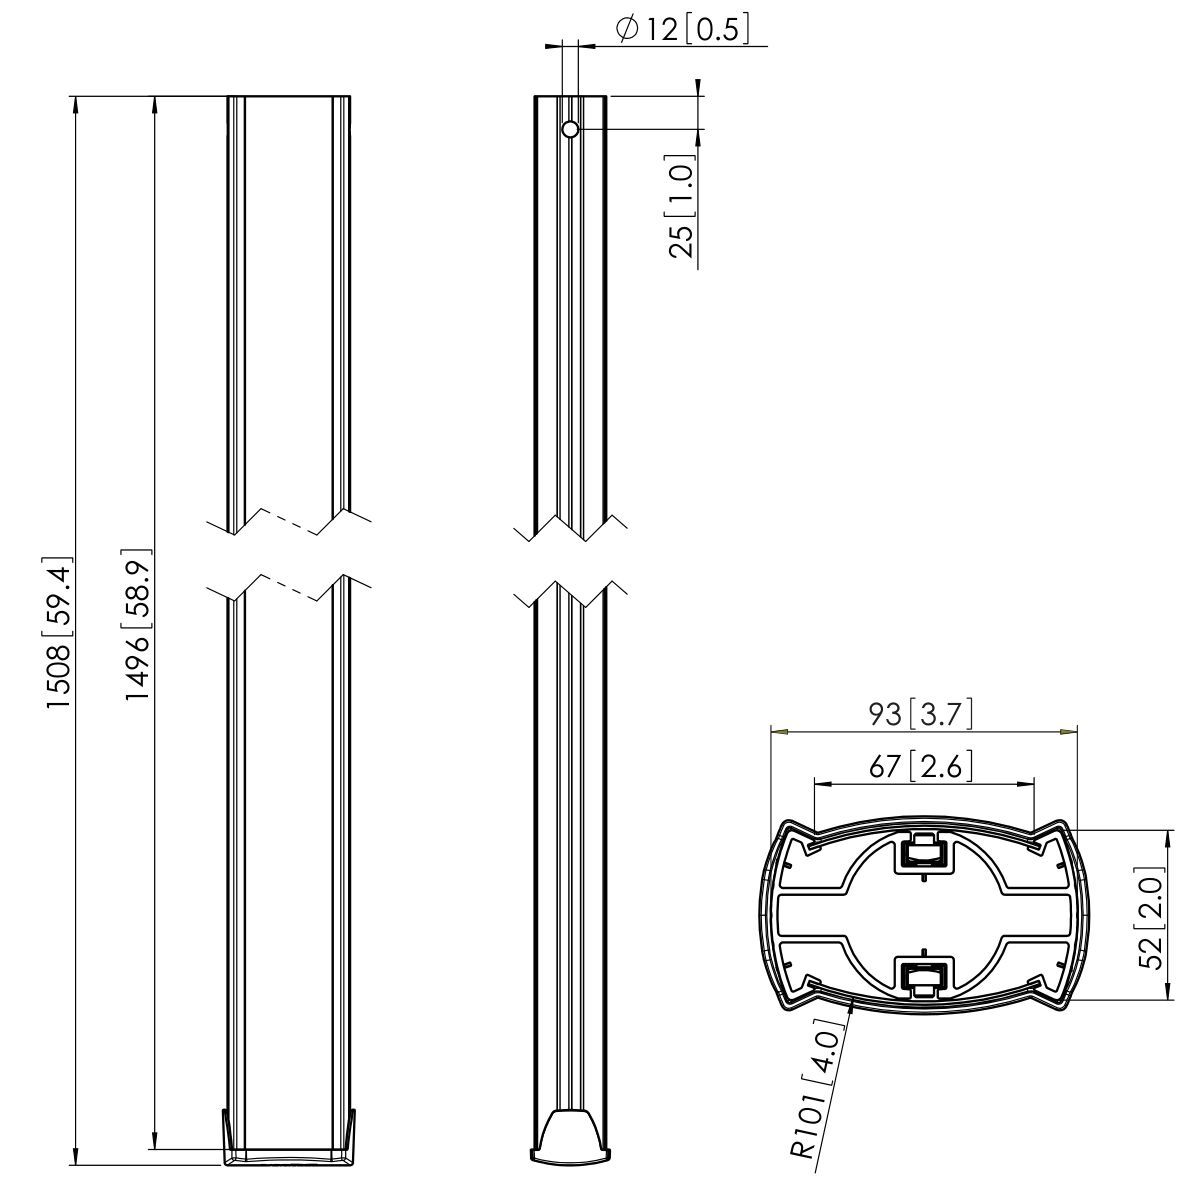 Vogel's PUC 2515 Deckenabhängungsprofil - Dimensions